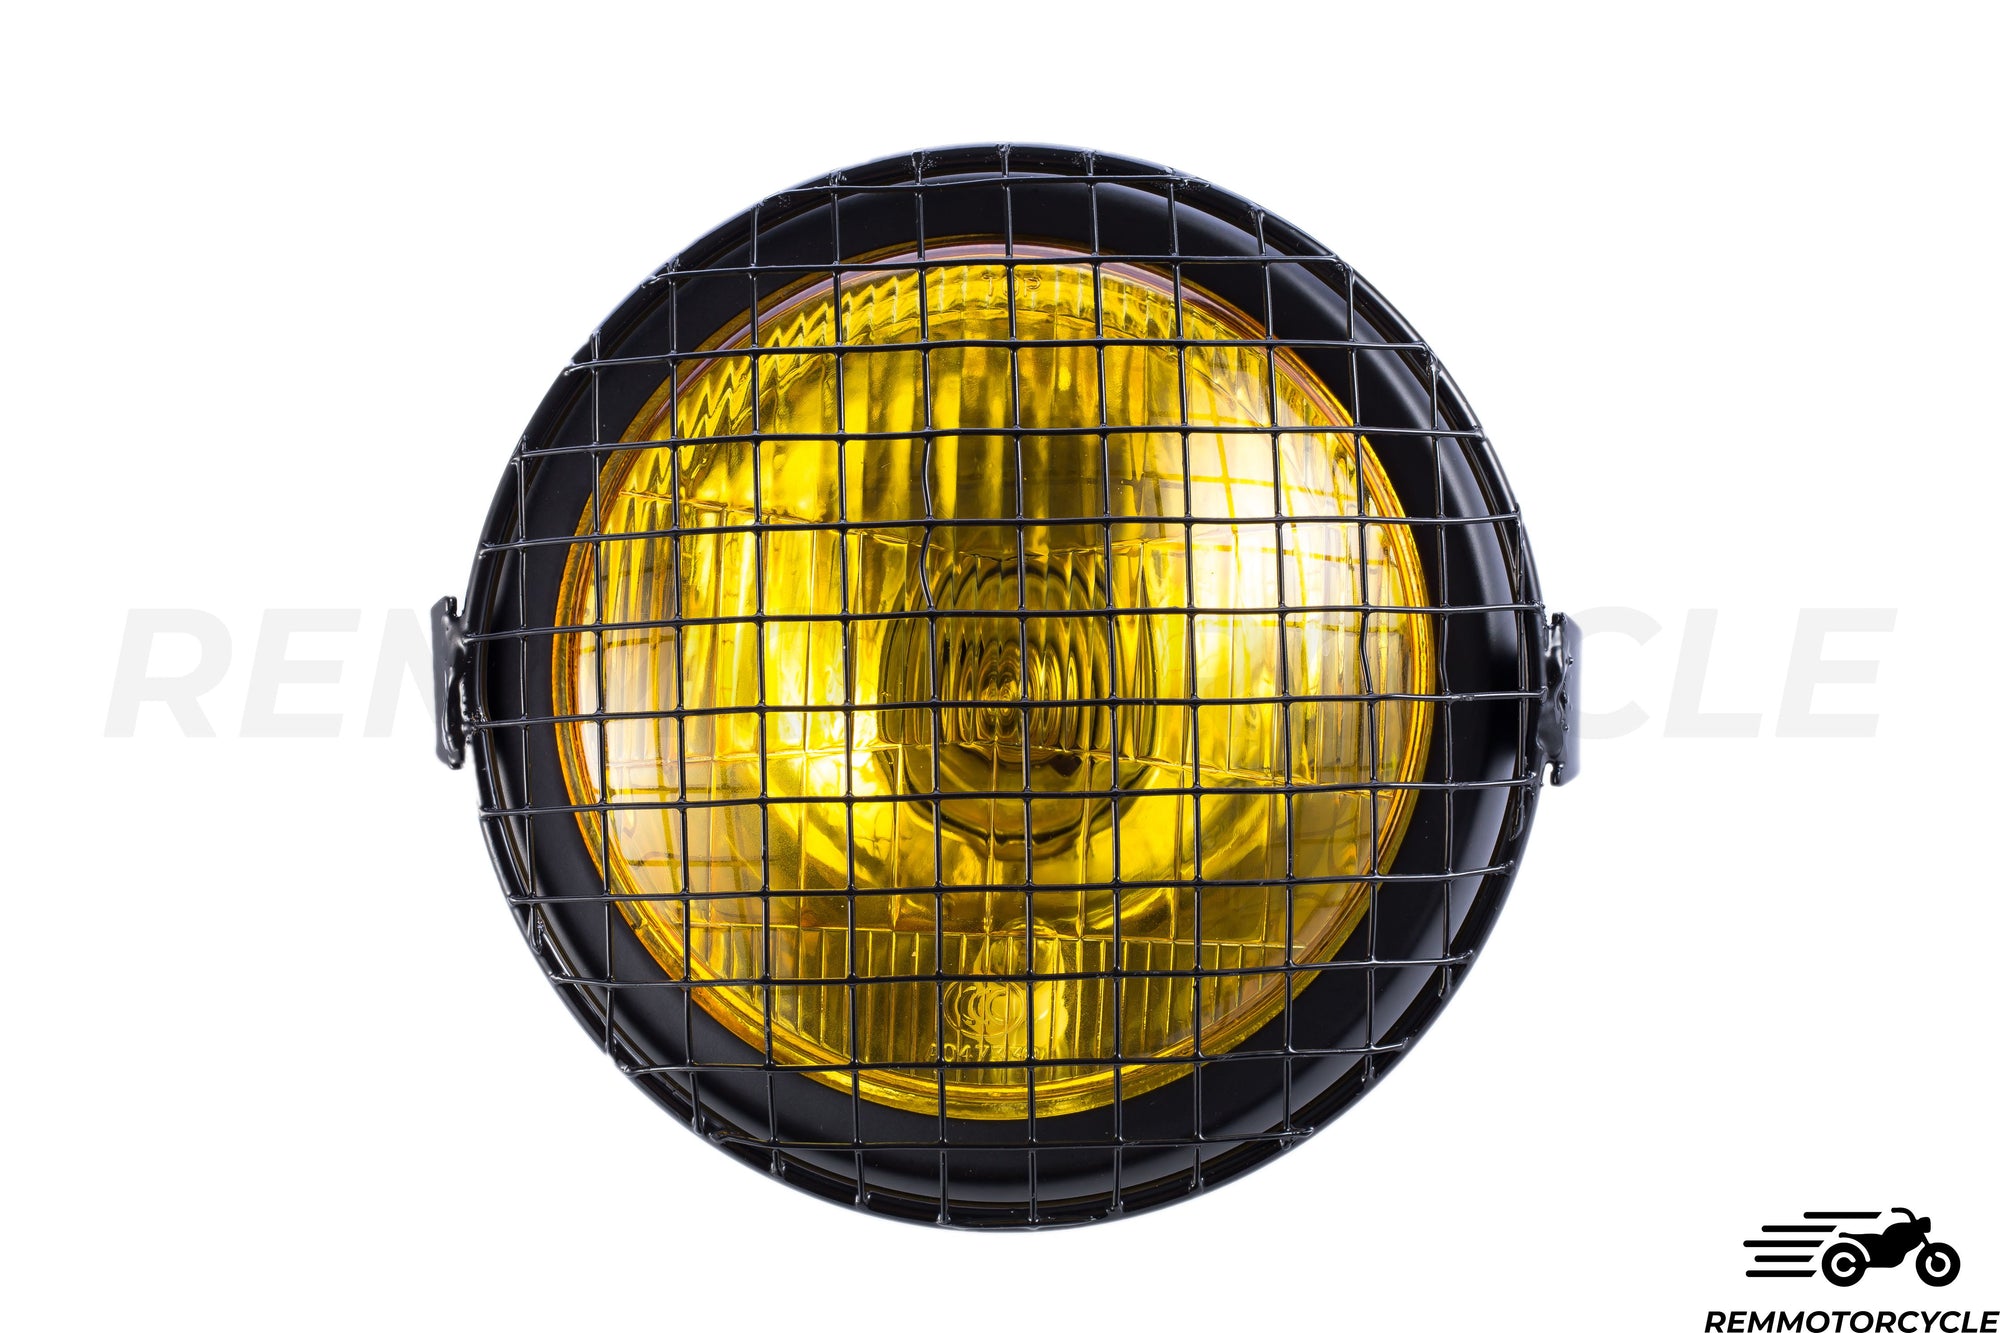 Vintage scrambler vintage headlight with grid